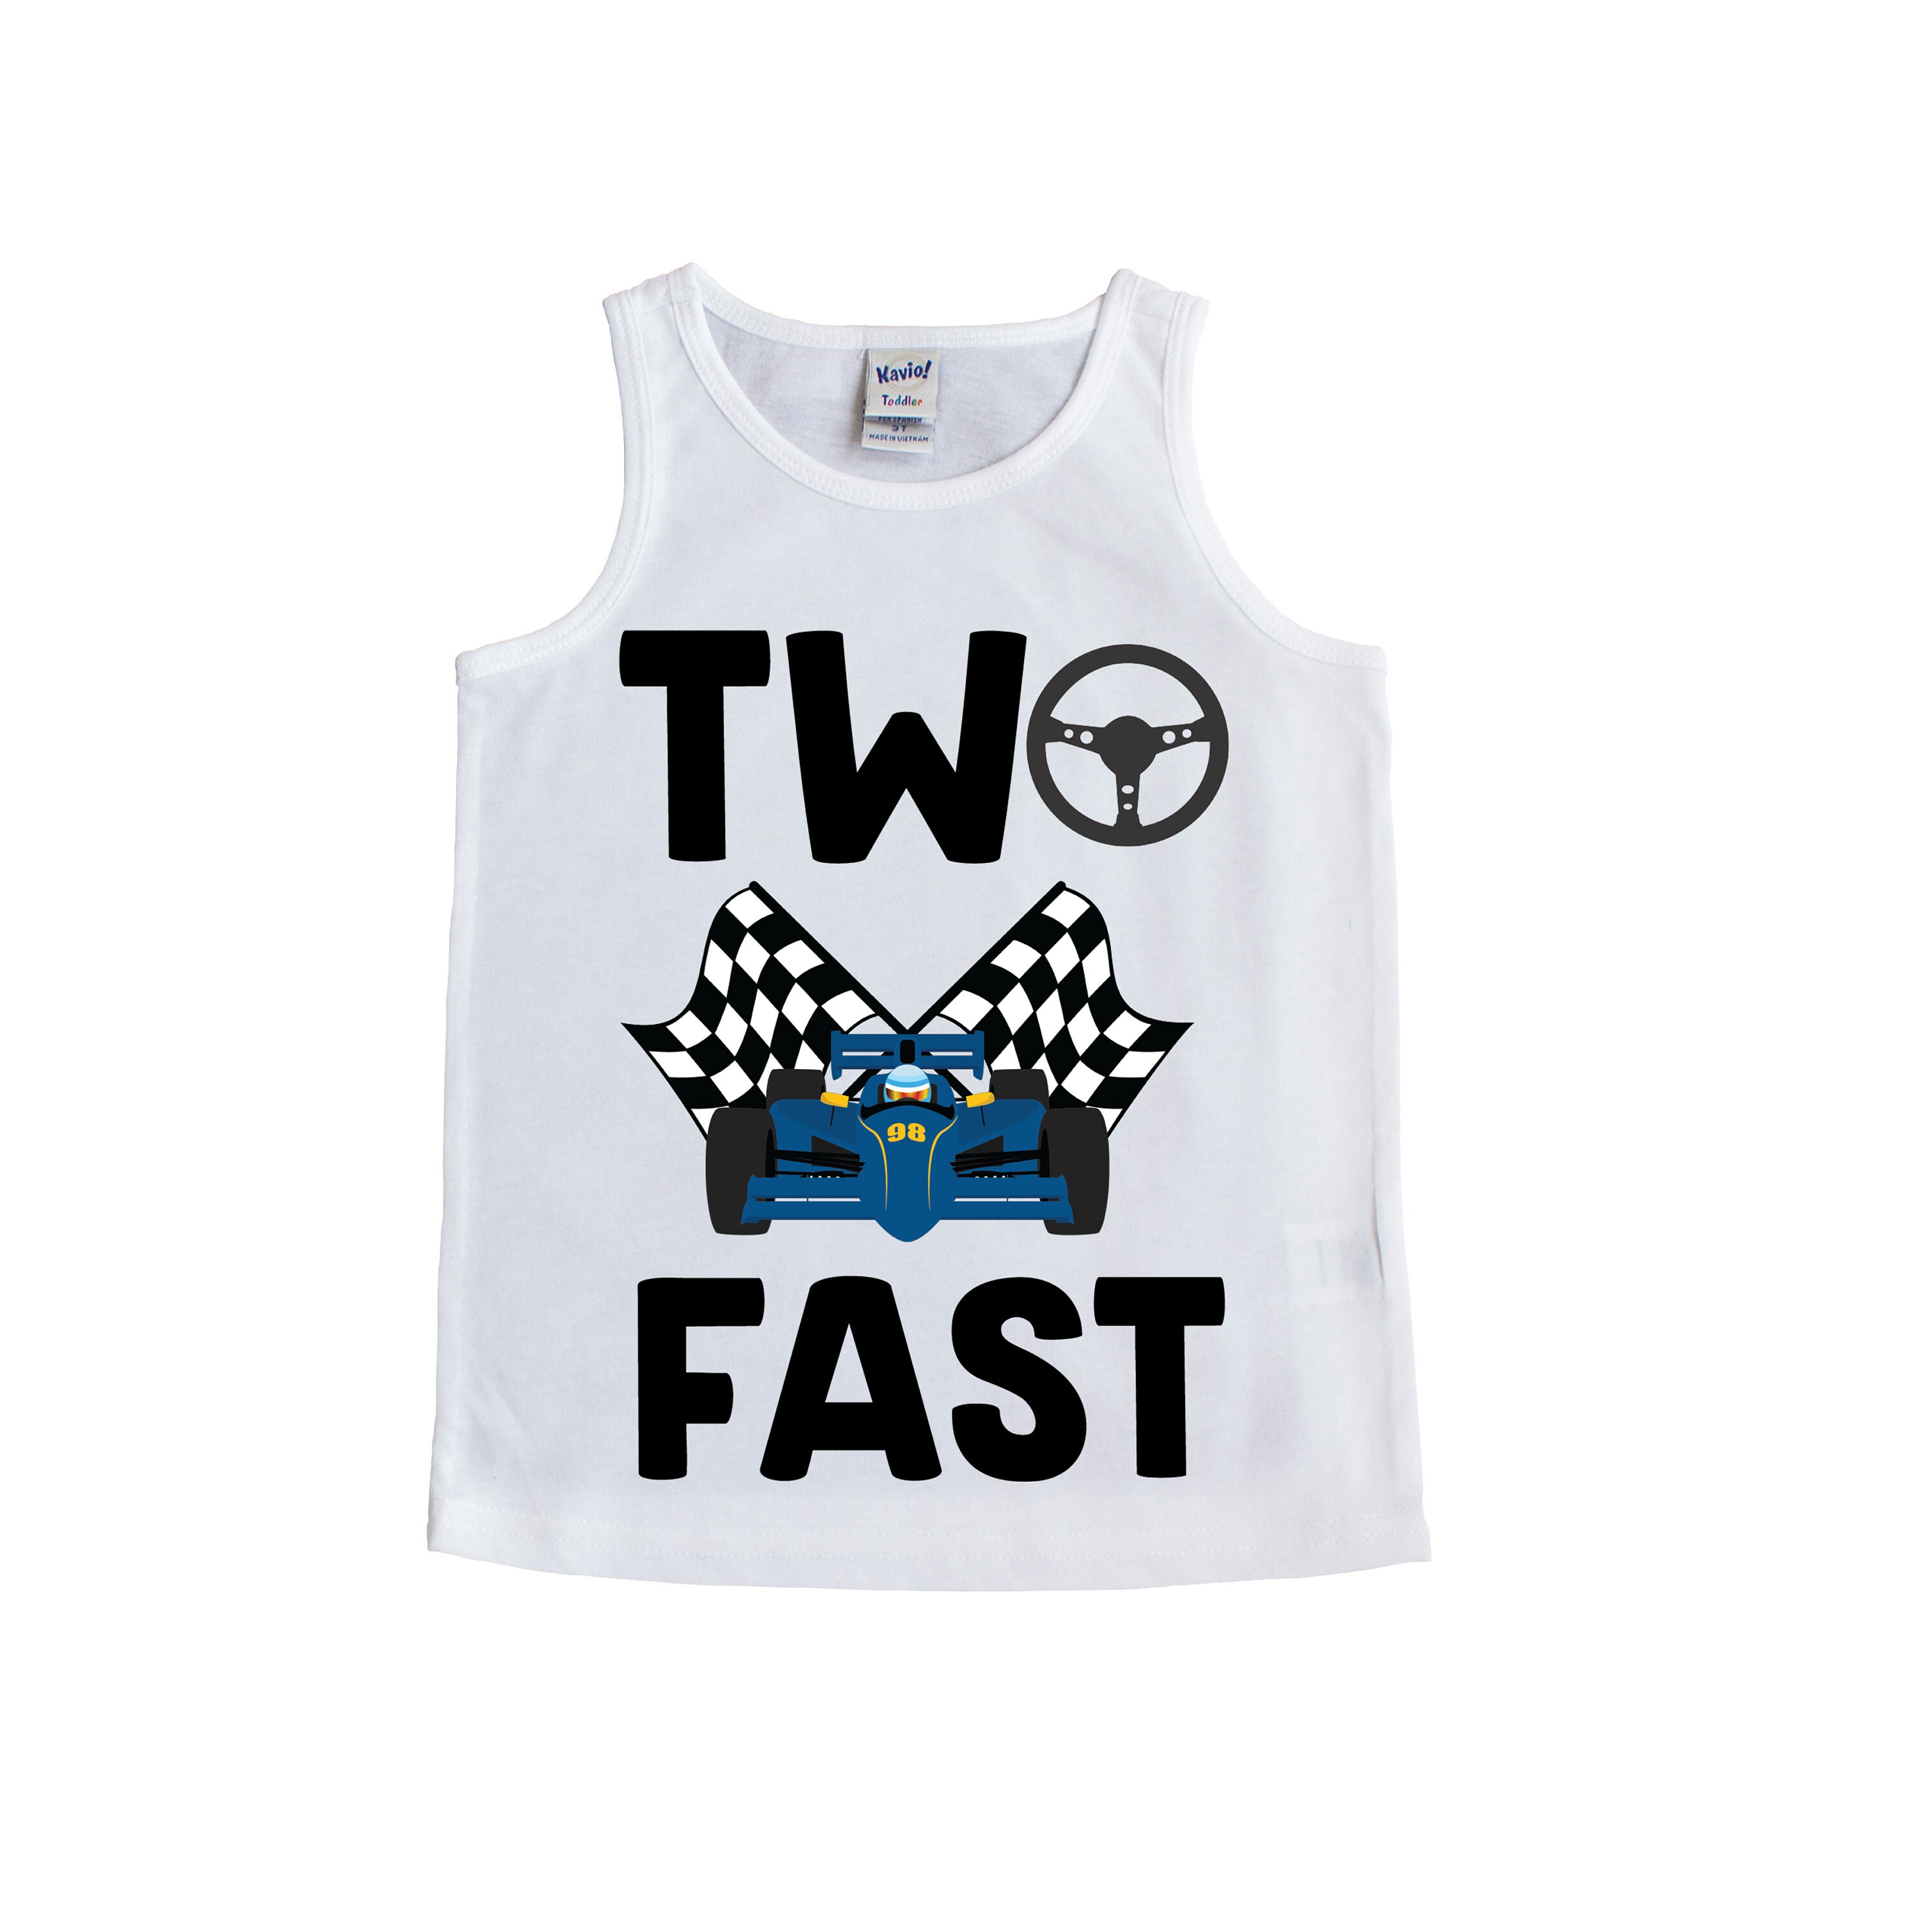 Two Fast Race Car Shirt Racecar Birthday Shirt Birthday Boy - Etsy